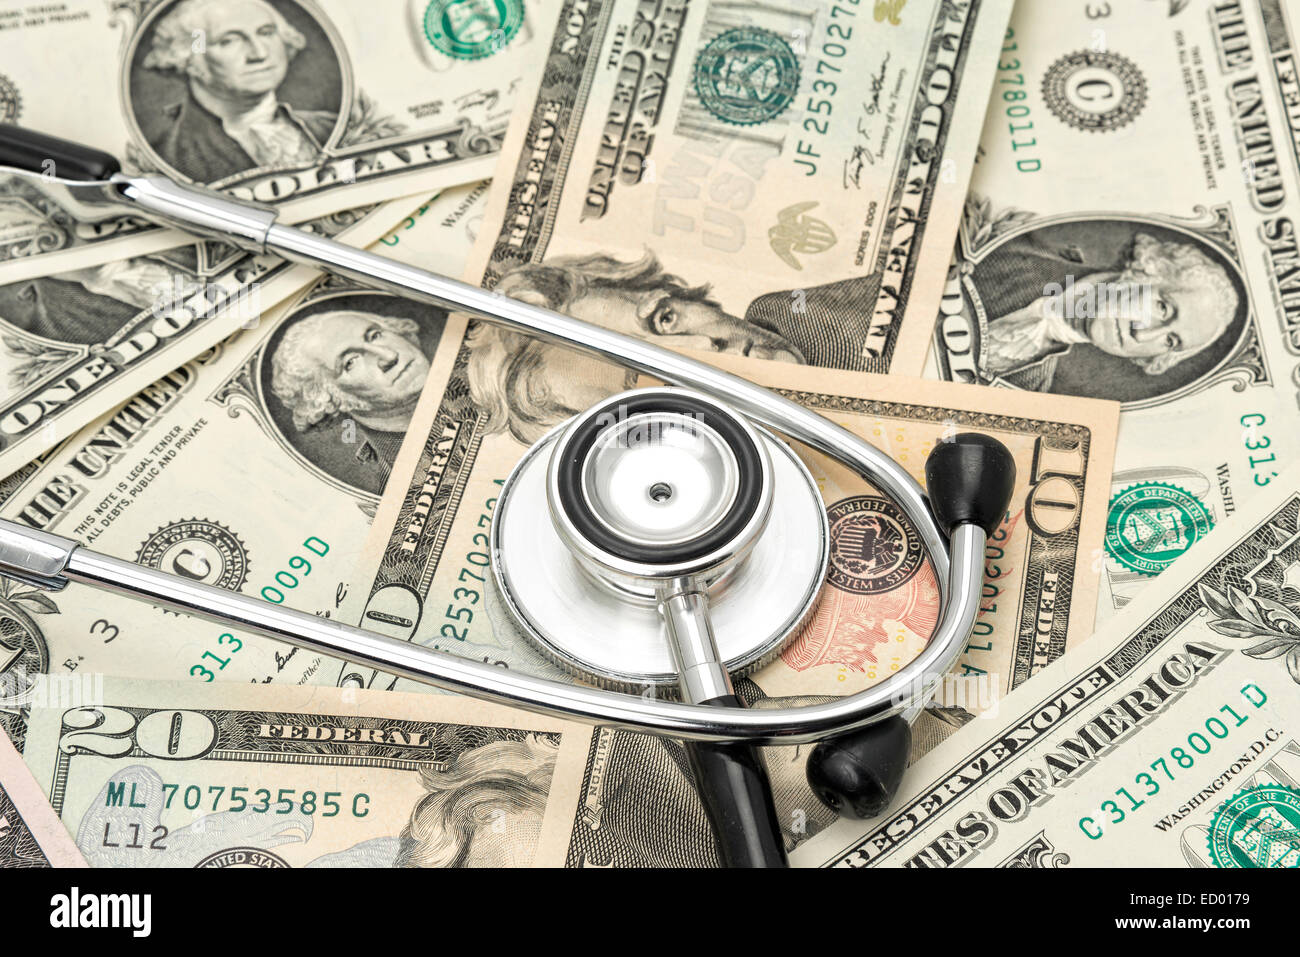 US Dollars under a doctors stethoscope - financial concept.     Studio shot Stock Photo